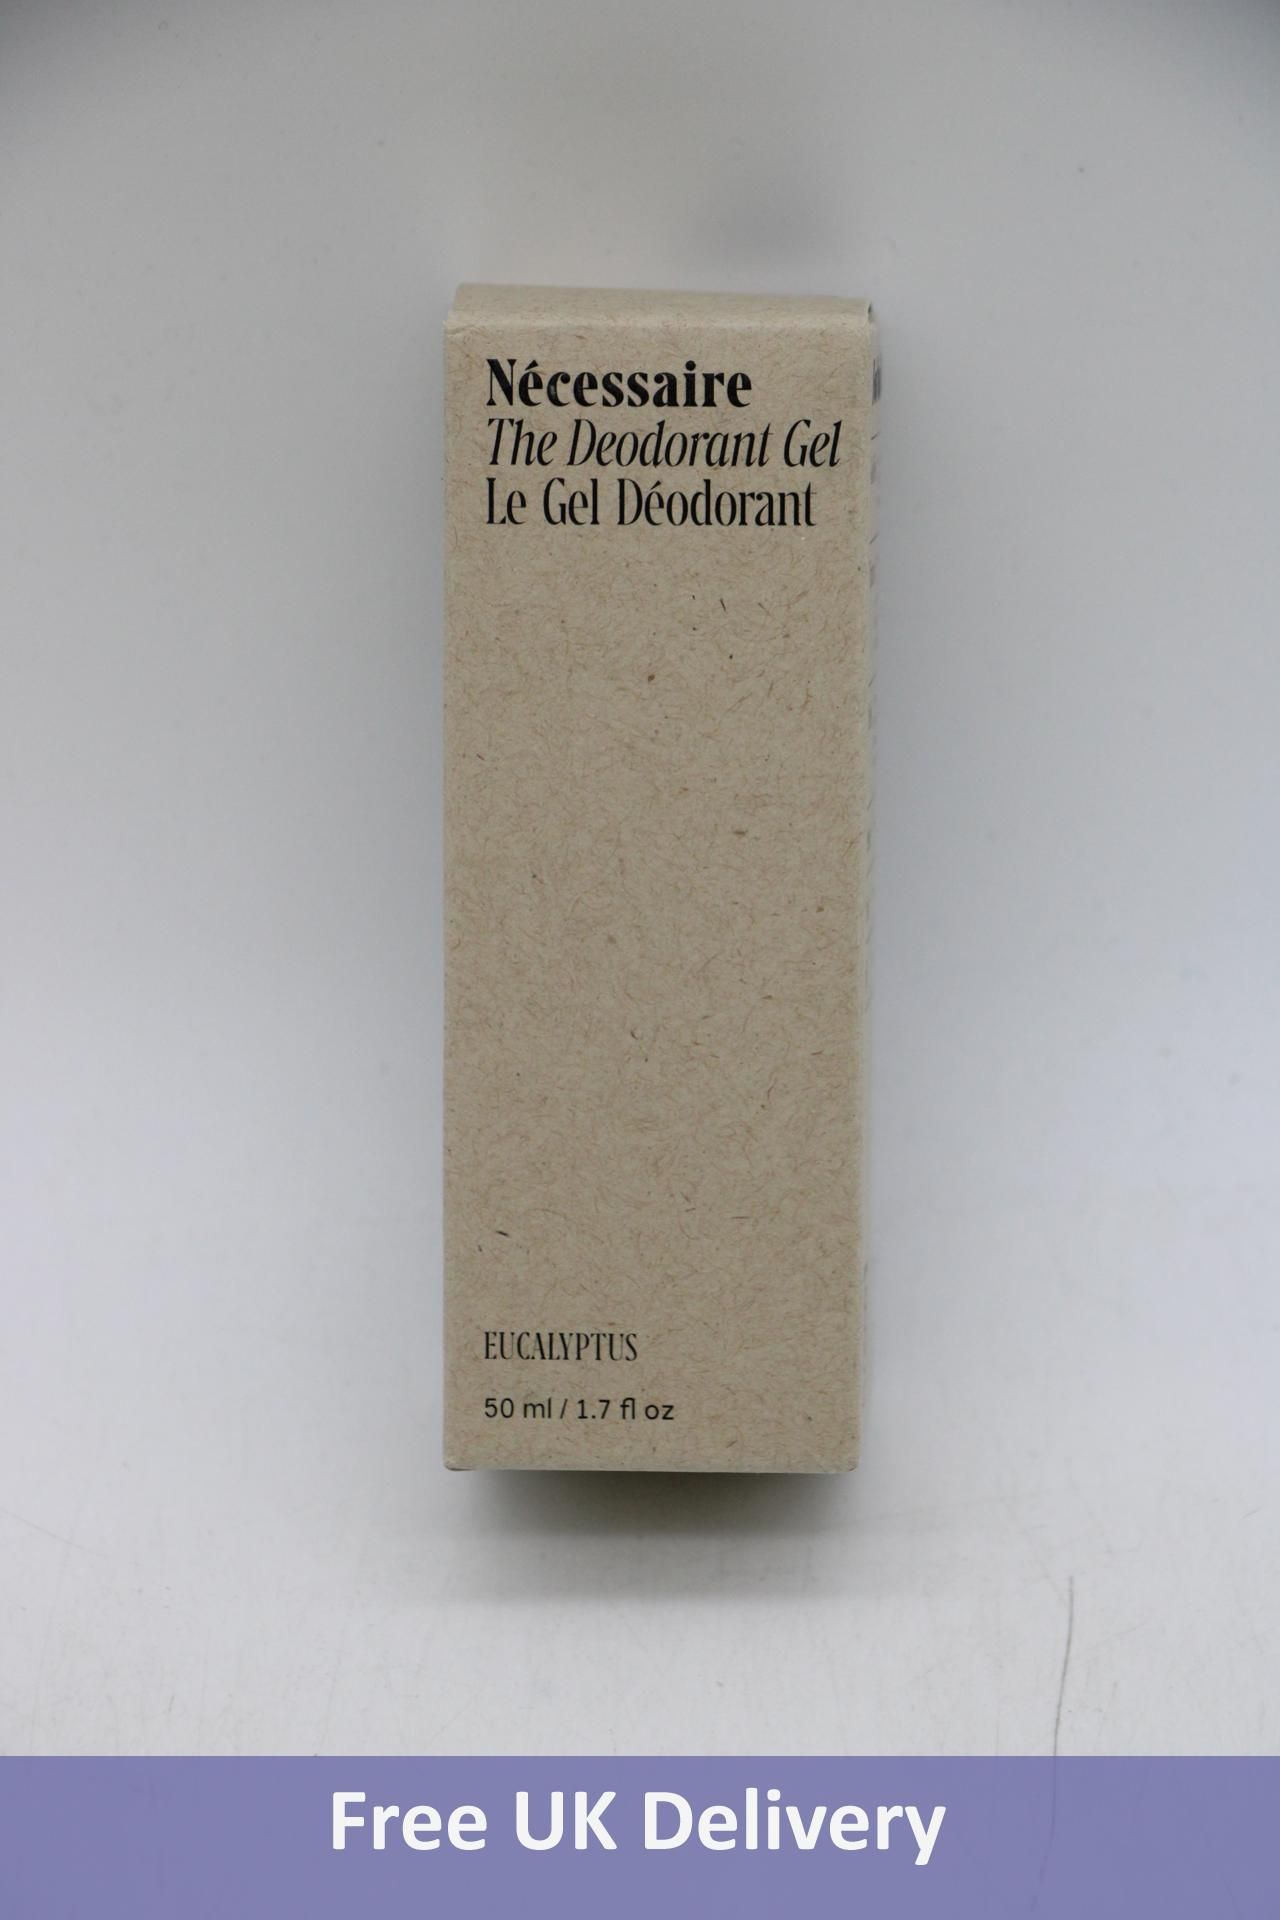 Fifteen bottles of Necessaire The Deodorant Gel Eucalyptus, Lime Green, Size 50ml - Image 3 of 5